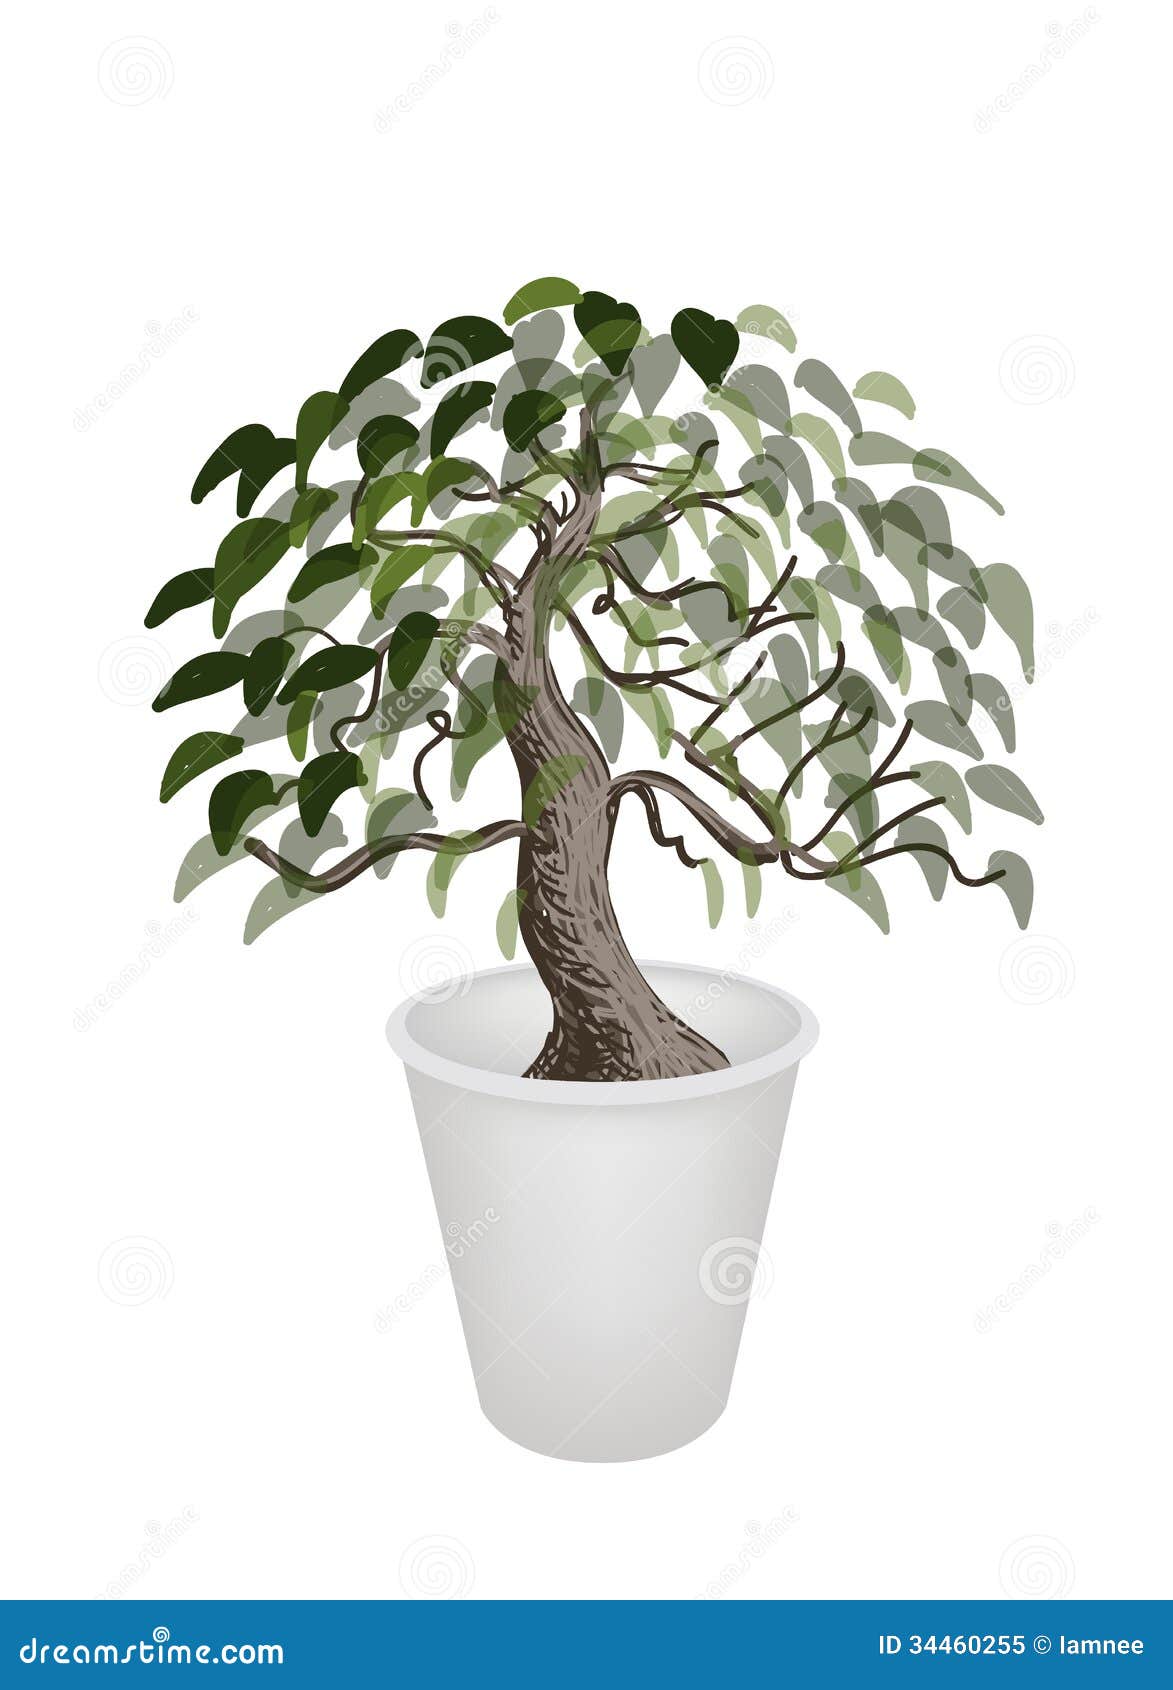 bonsai tree clipart - photo #47